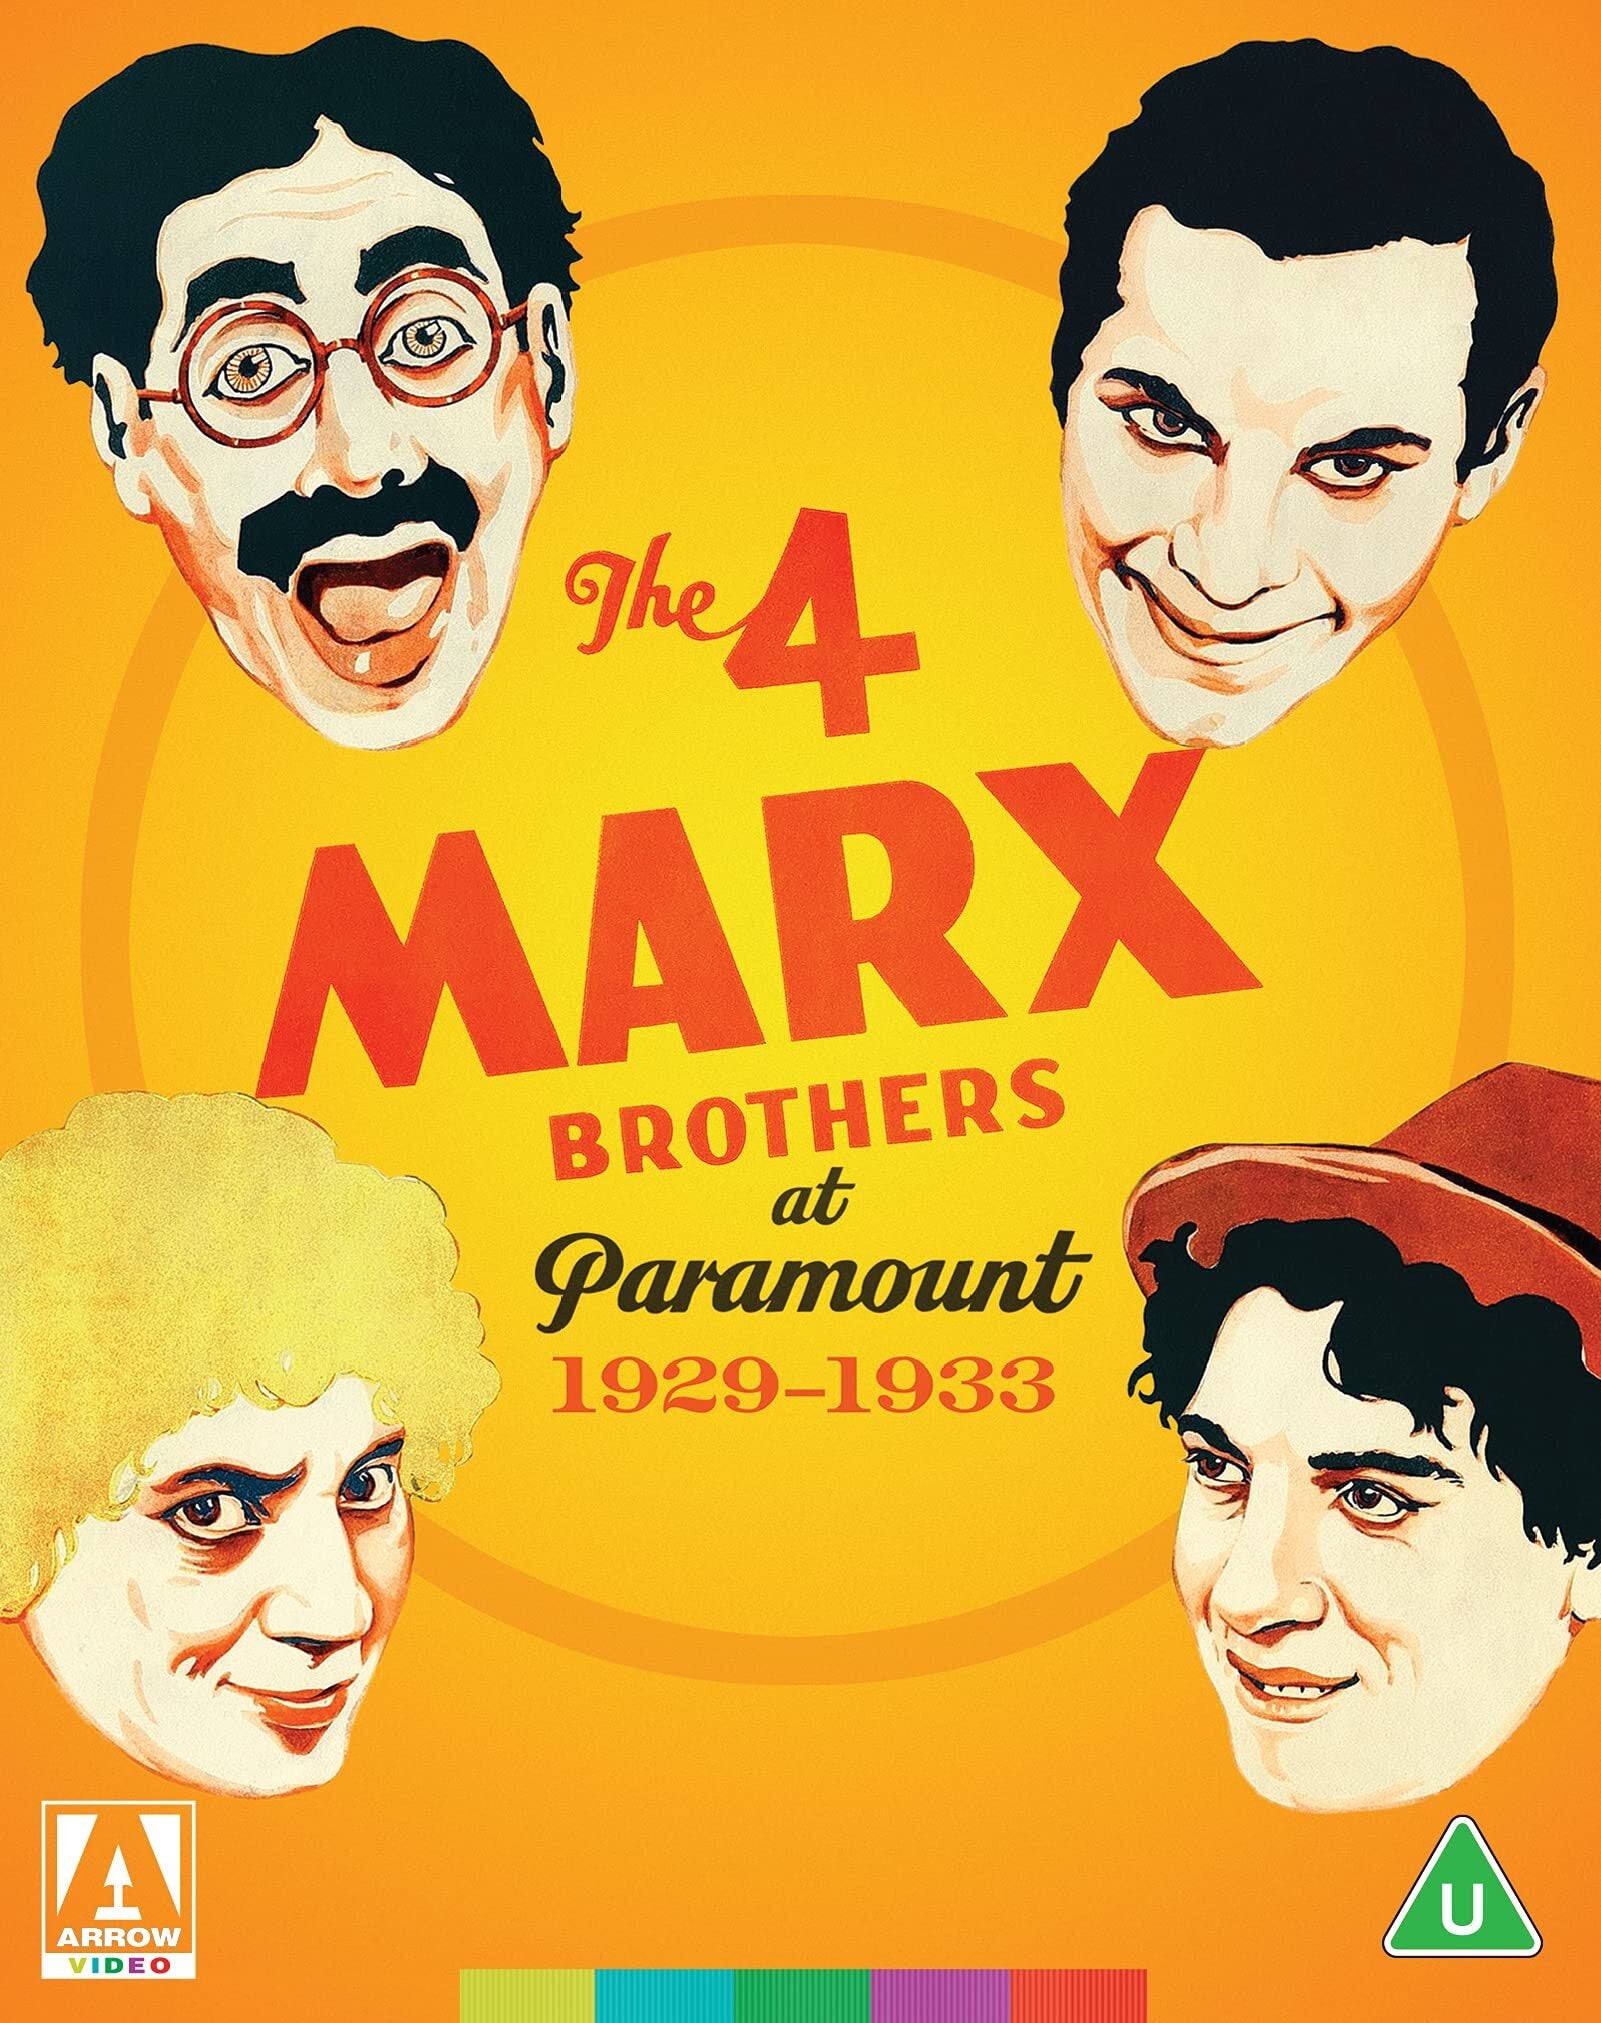 THE 4 MARX BROTHERS AT PARAMOUNT 1929-1933 (REGION B IMPORT) BLU-RAY